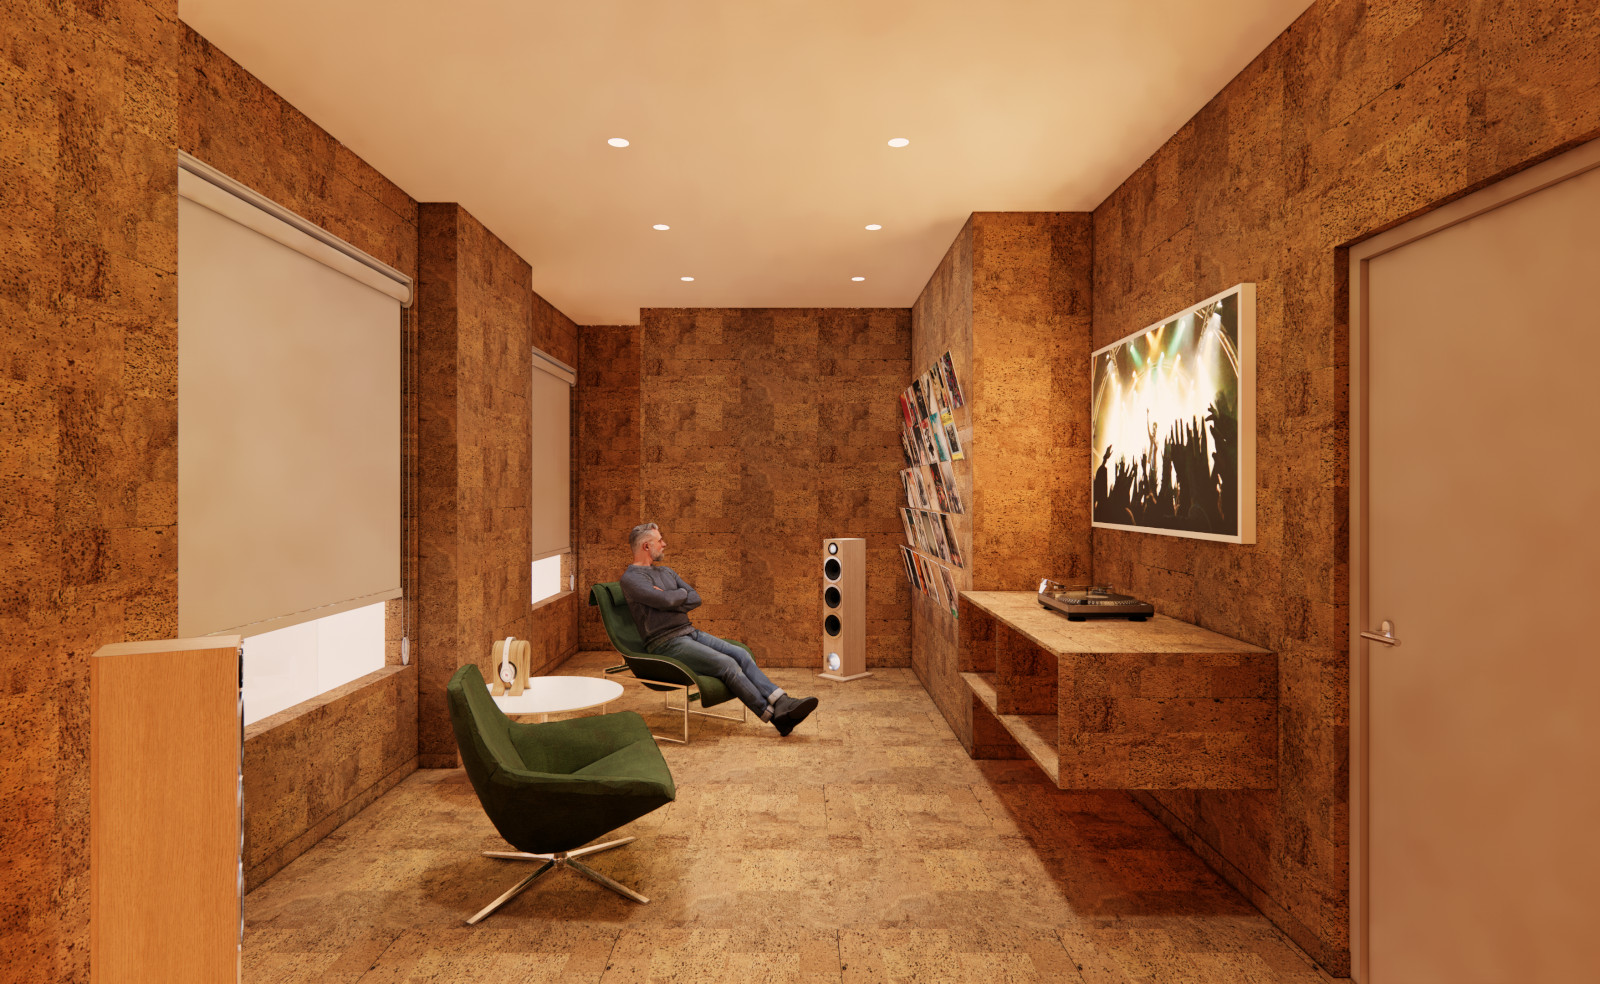 Architecture Concept: Cork Music Room